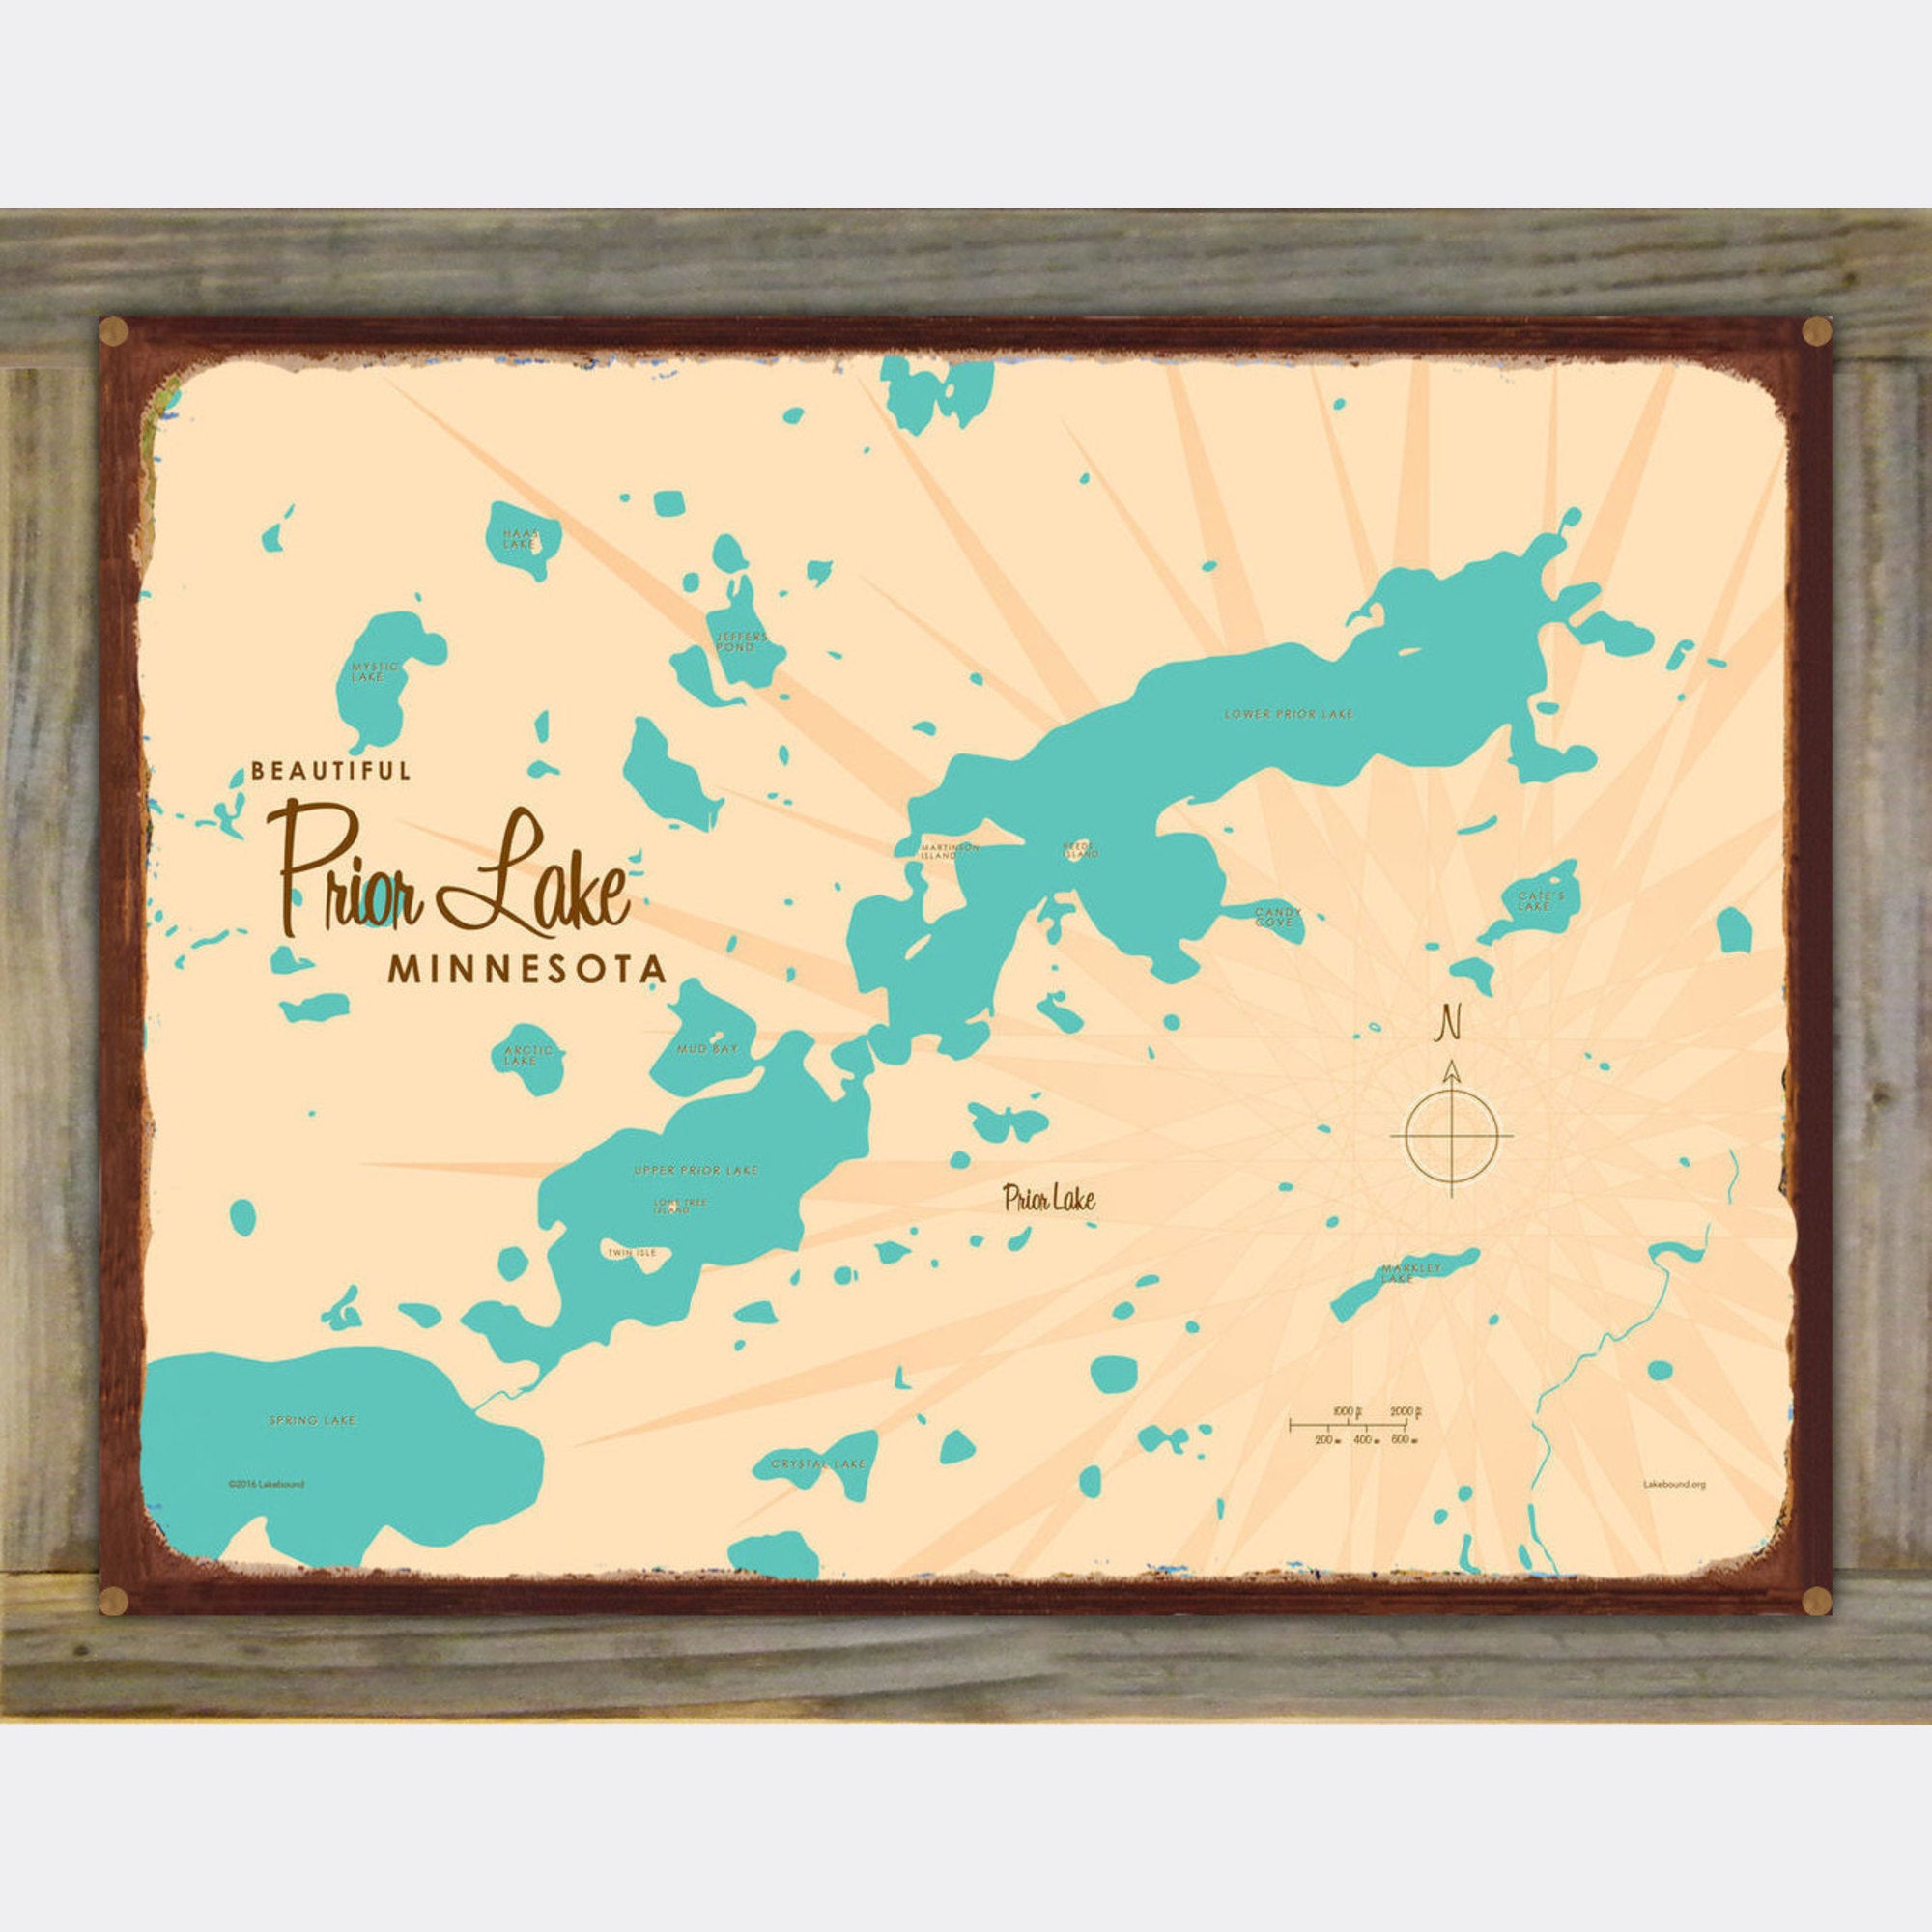 Prior Lake Minnesota, Wood-Mounted Rustic Metal Sign Map Art